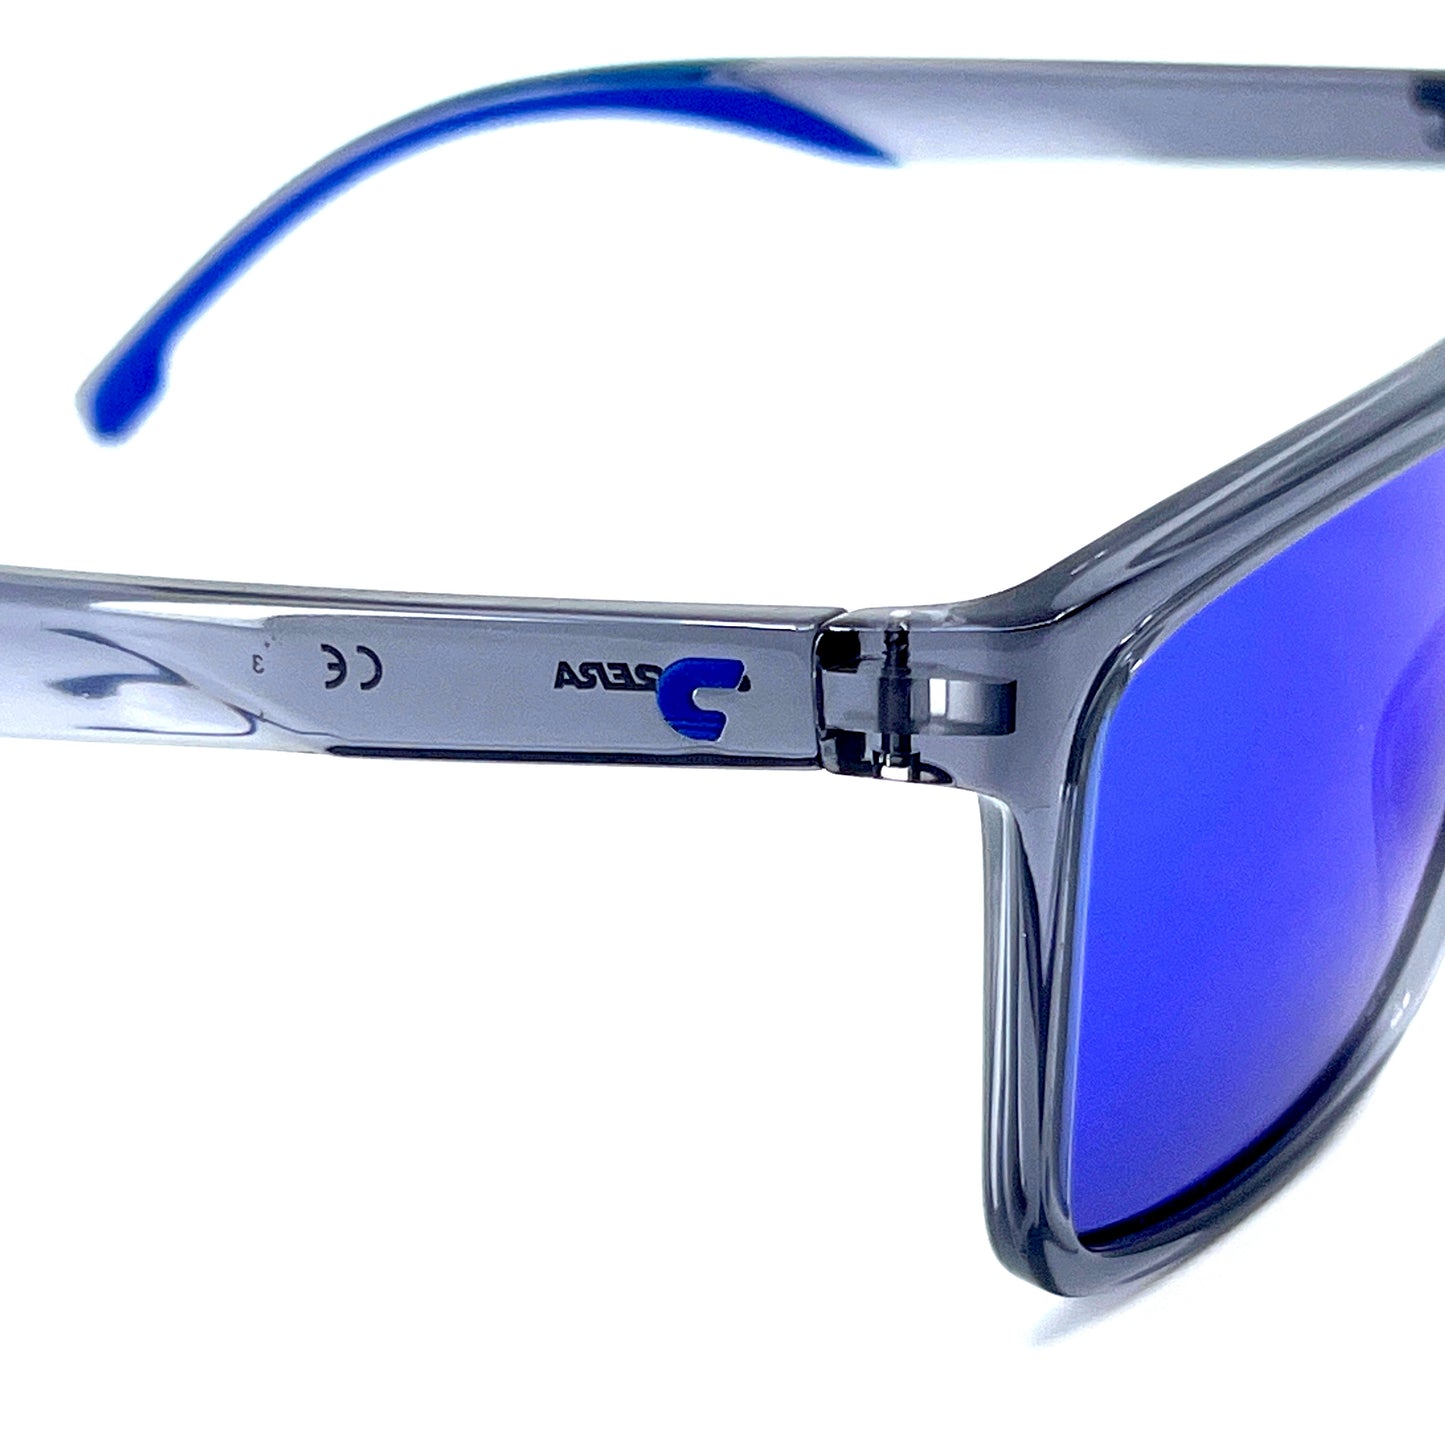 CARRERA Sunglasses 8055/S KB7Z0